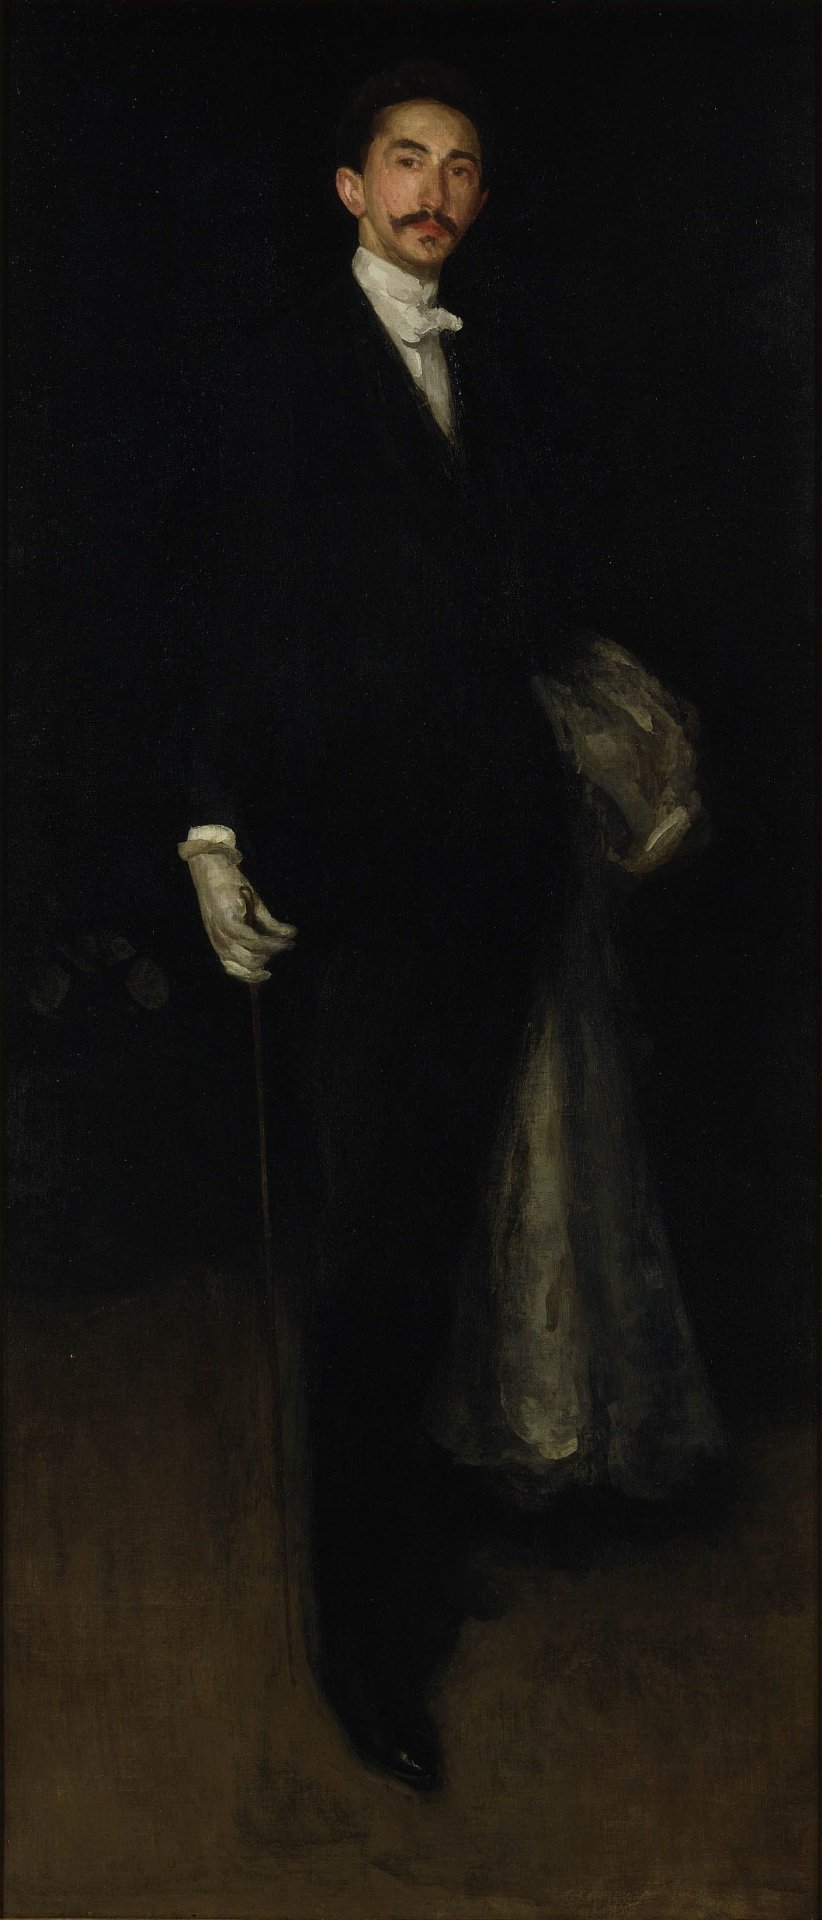 Arrangement in Black and Gold-Comte Robert de Montesquiou, James McNeill Whistler